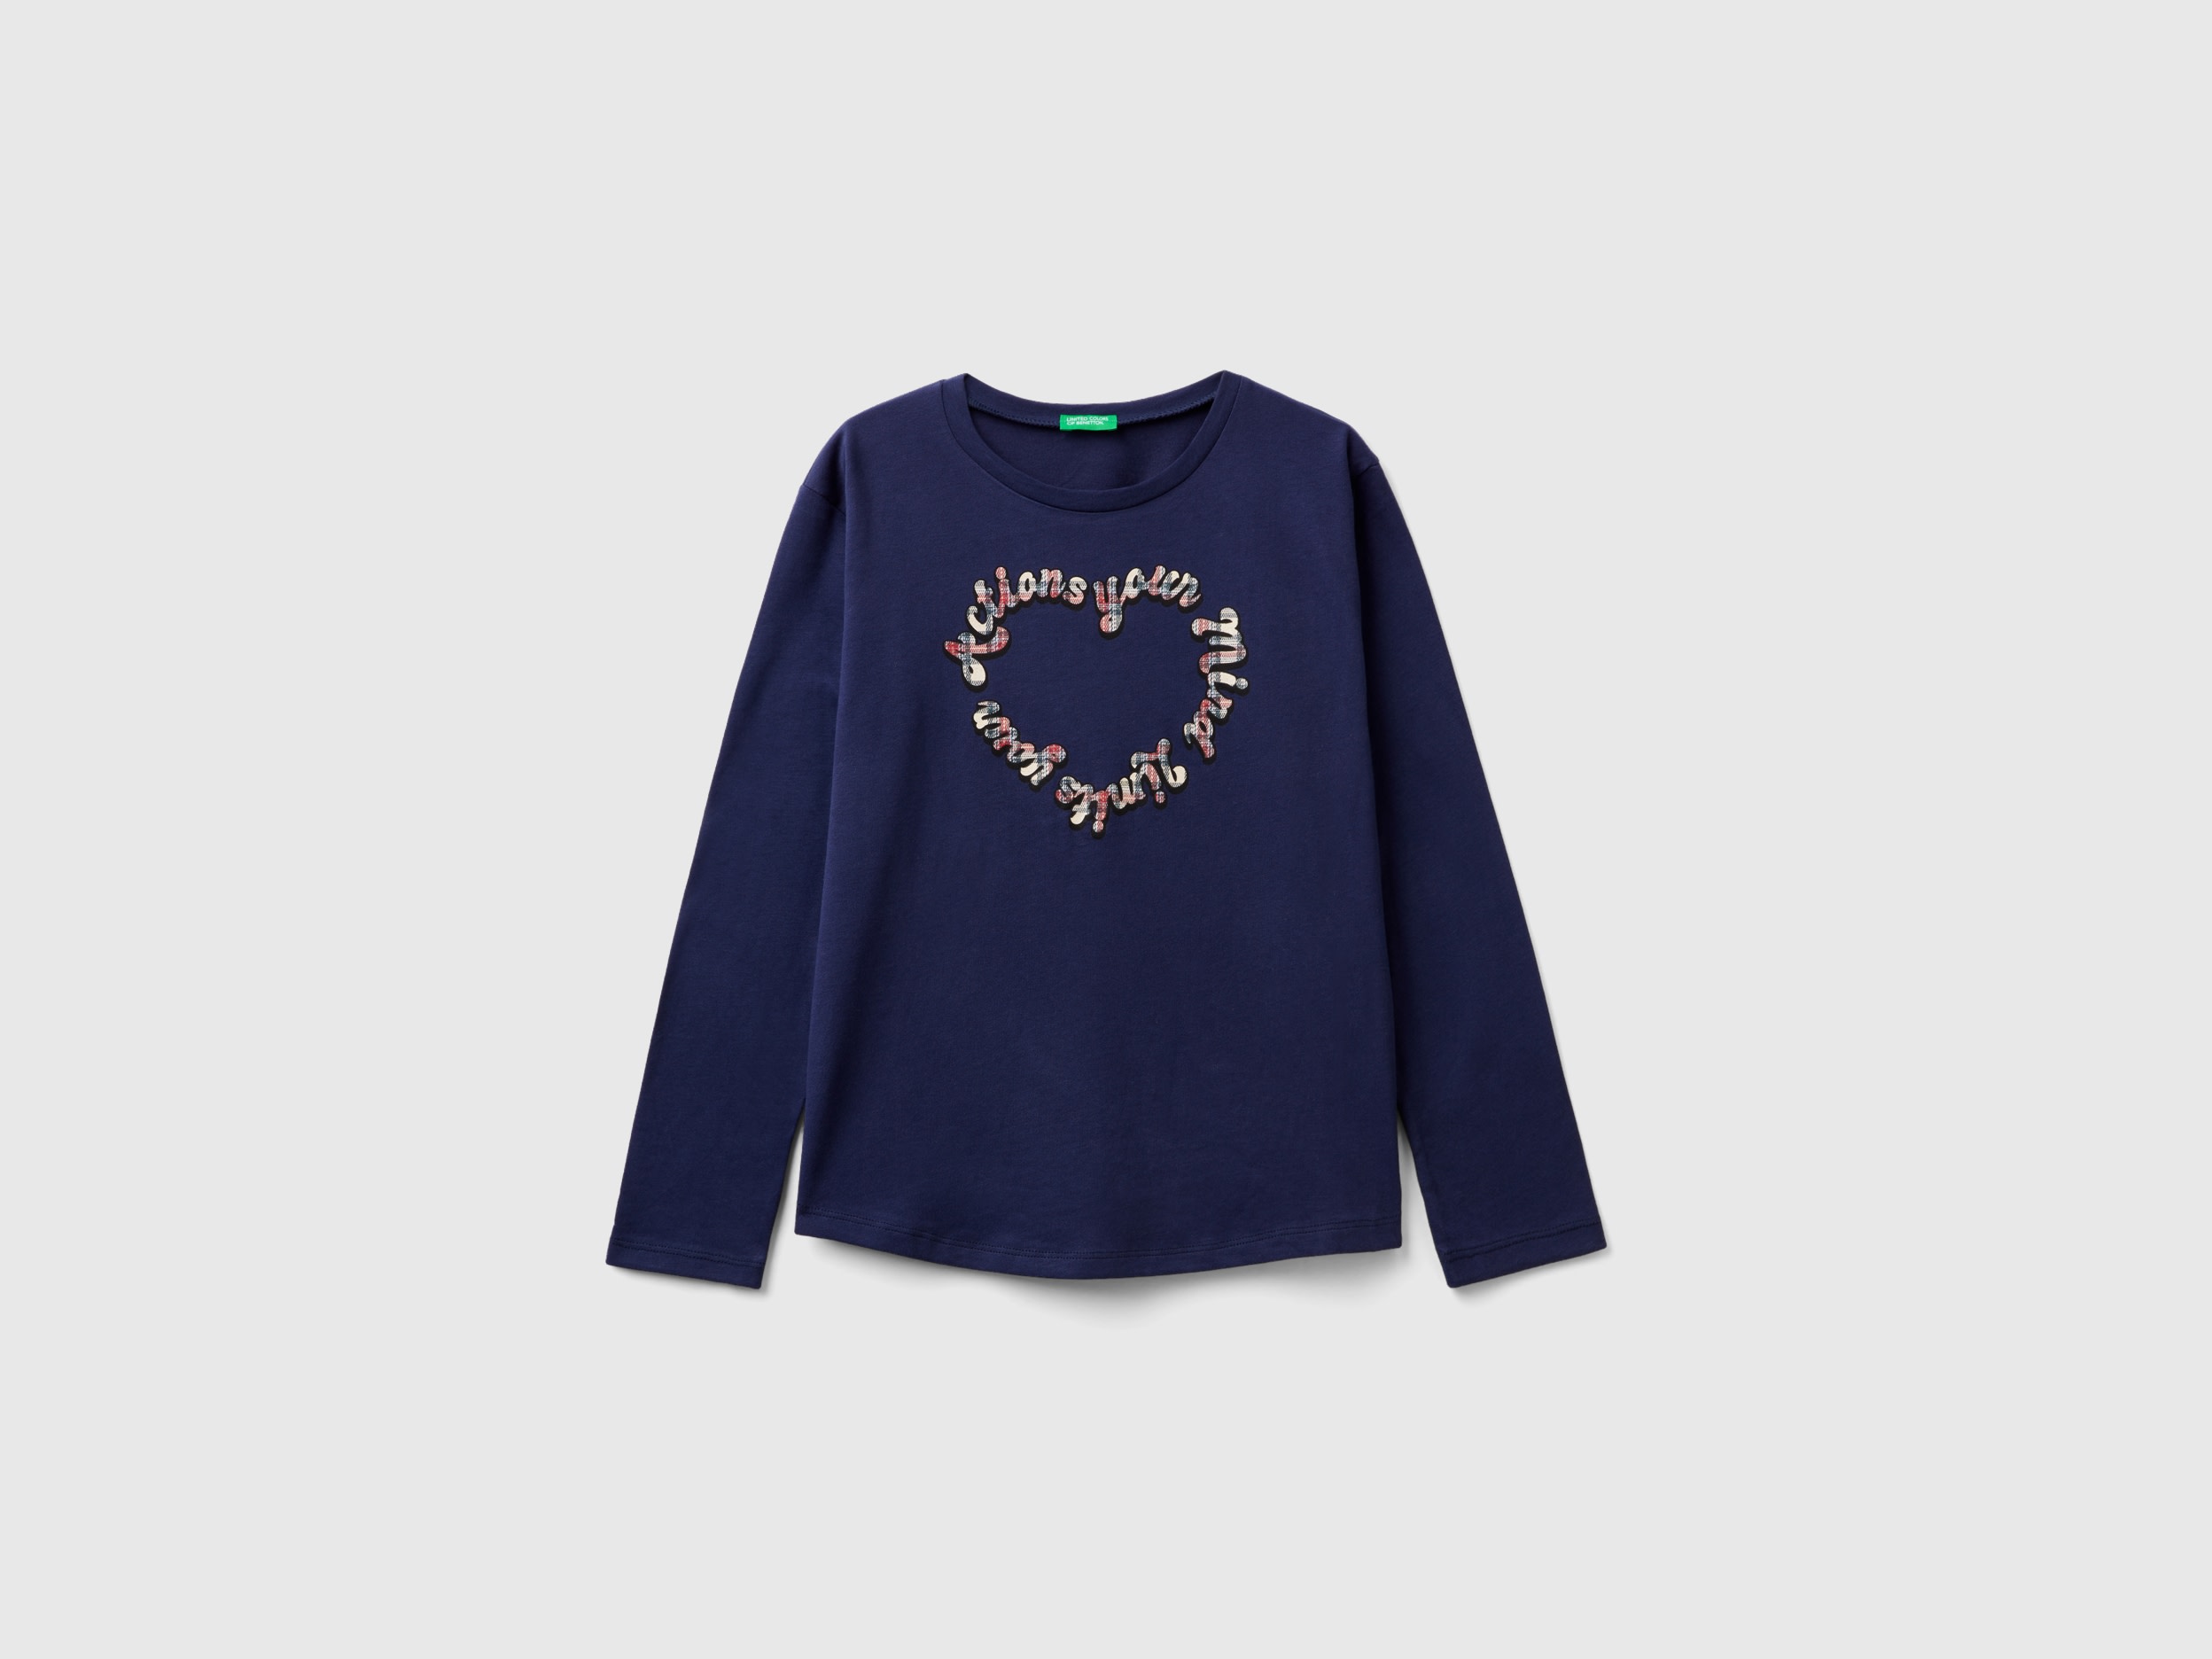 Benetton, Warm Cotton T-shirt With Glittery Print, size 2XL, Dark Blue, Kids